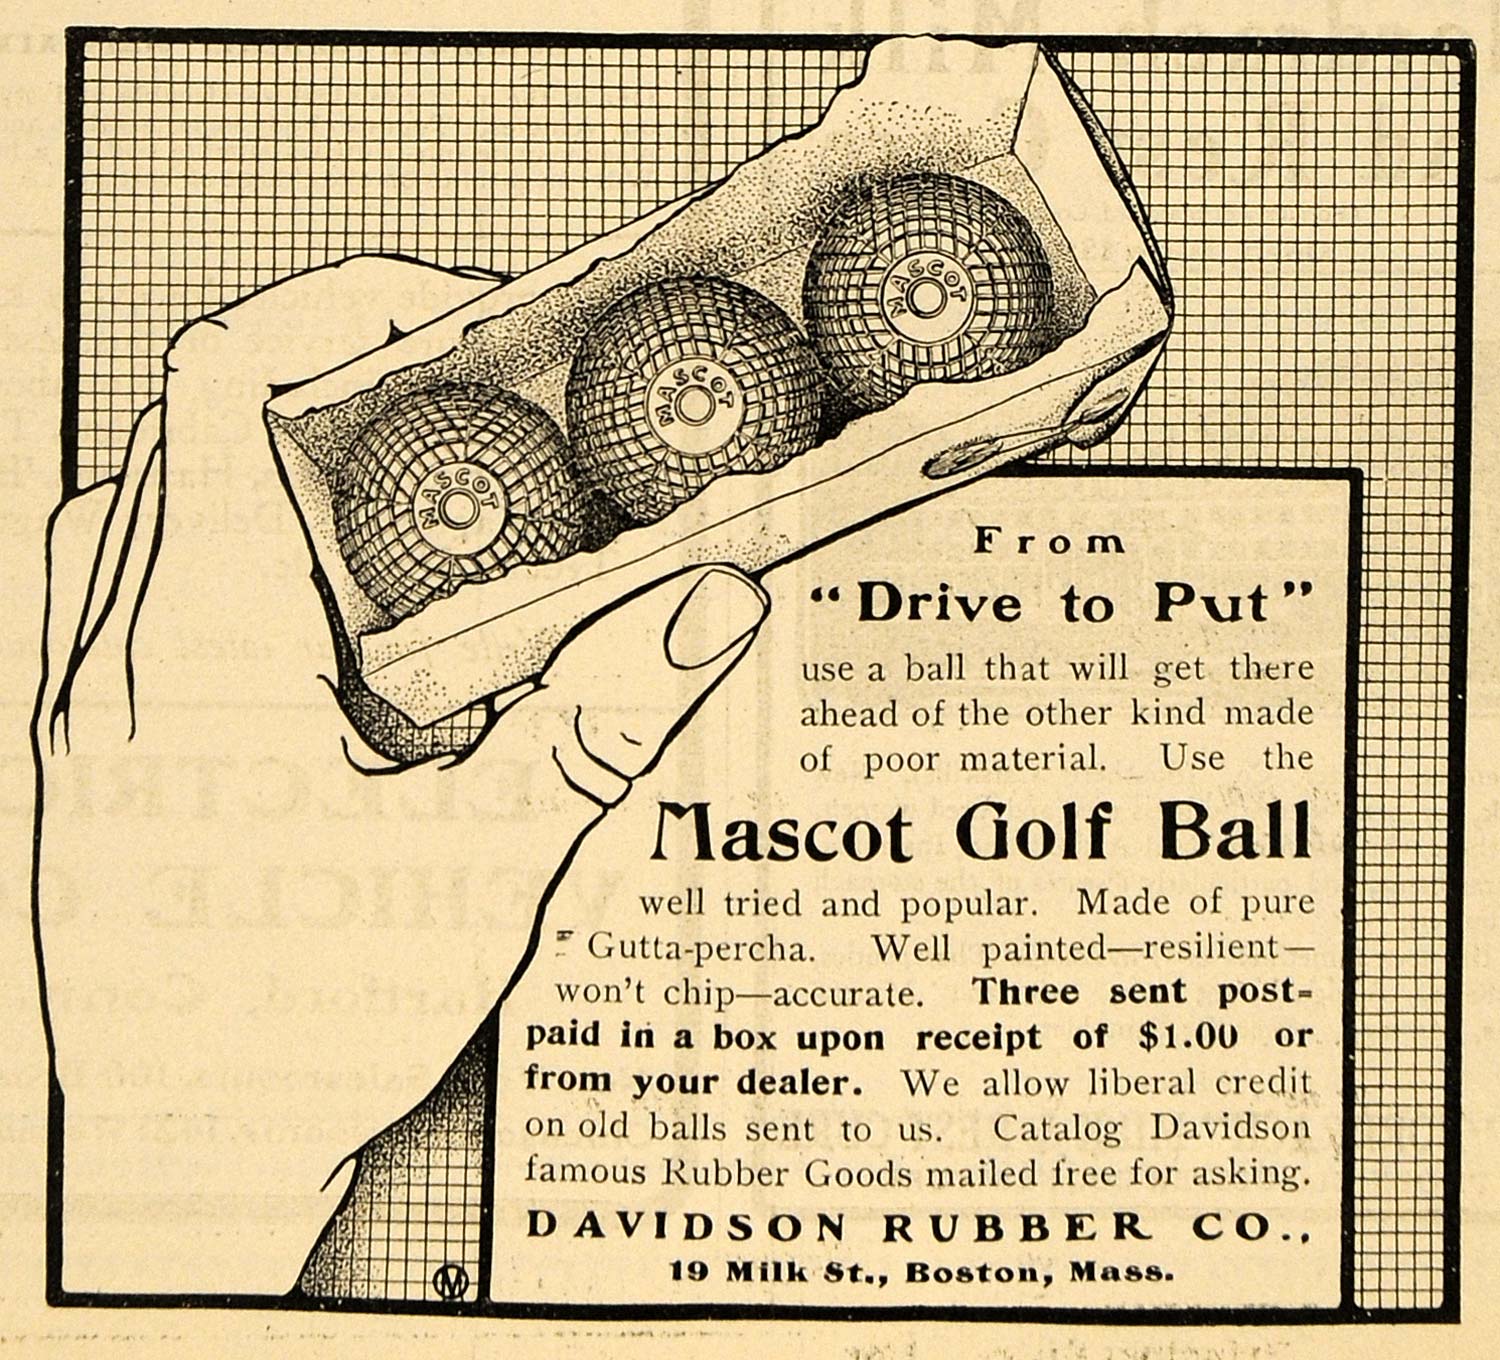 1902 Ad Davidson Rubber Mascot Golf Ball Drive to Put - ORIGINAL TOM2